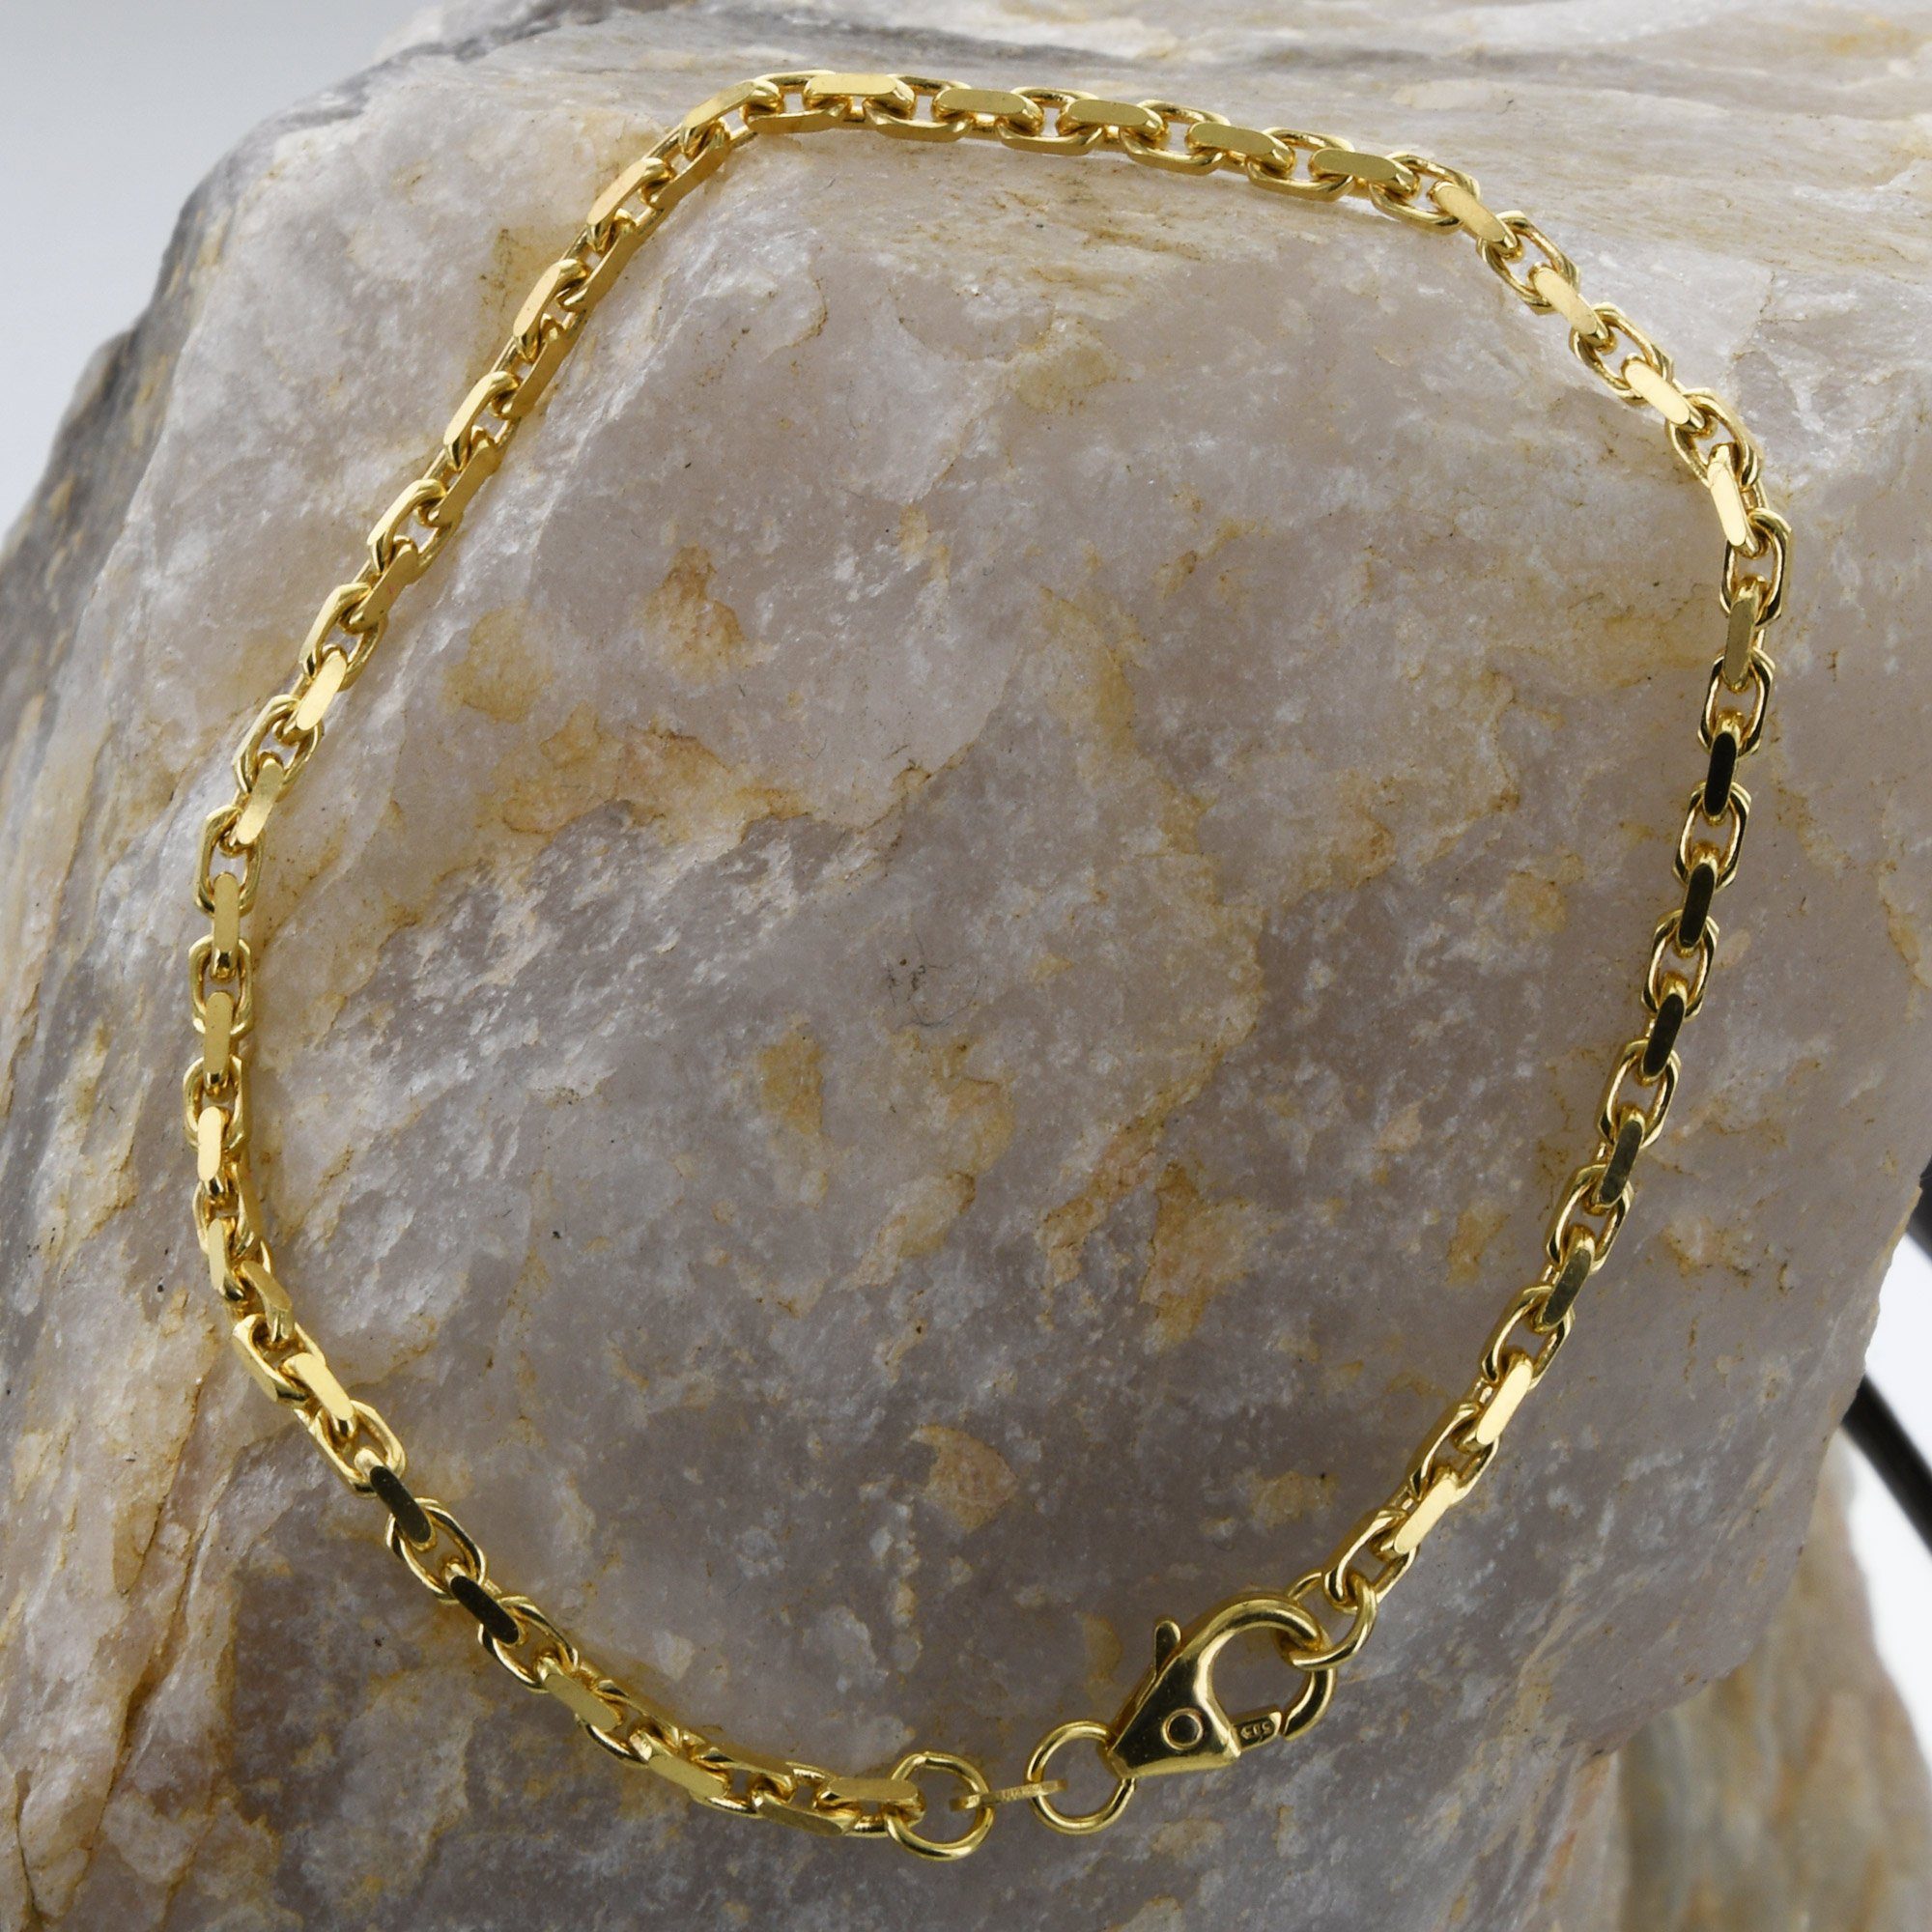 HOPLO Goldarmband Ankerkette diamantiert Länge 19cm - Breite 2,5mm - 750-18 Karat Gold